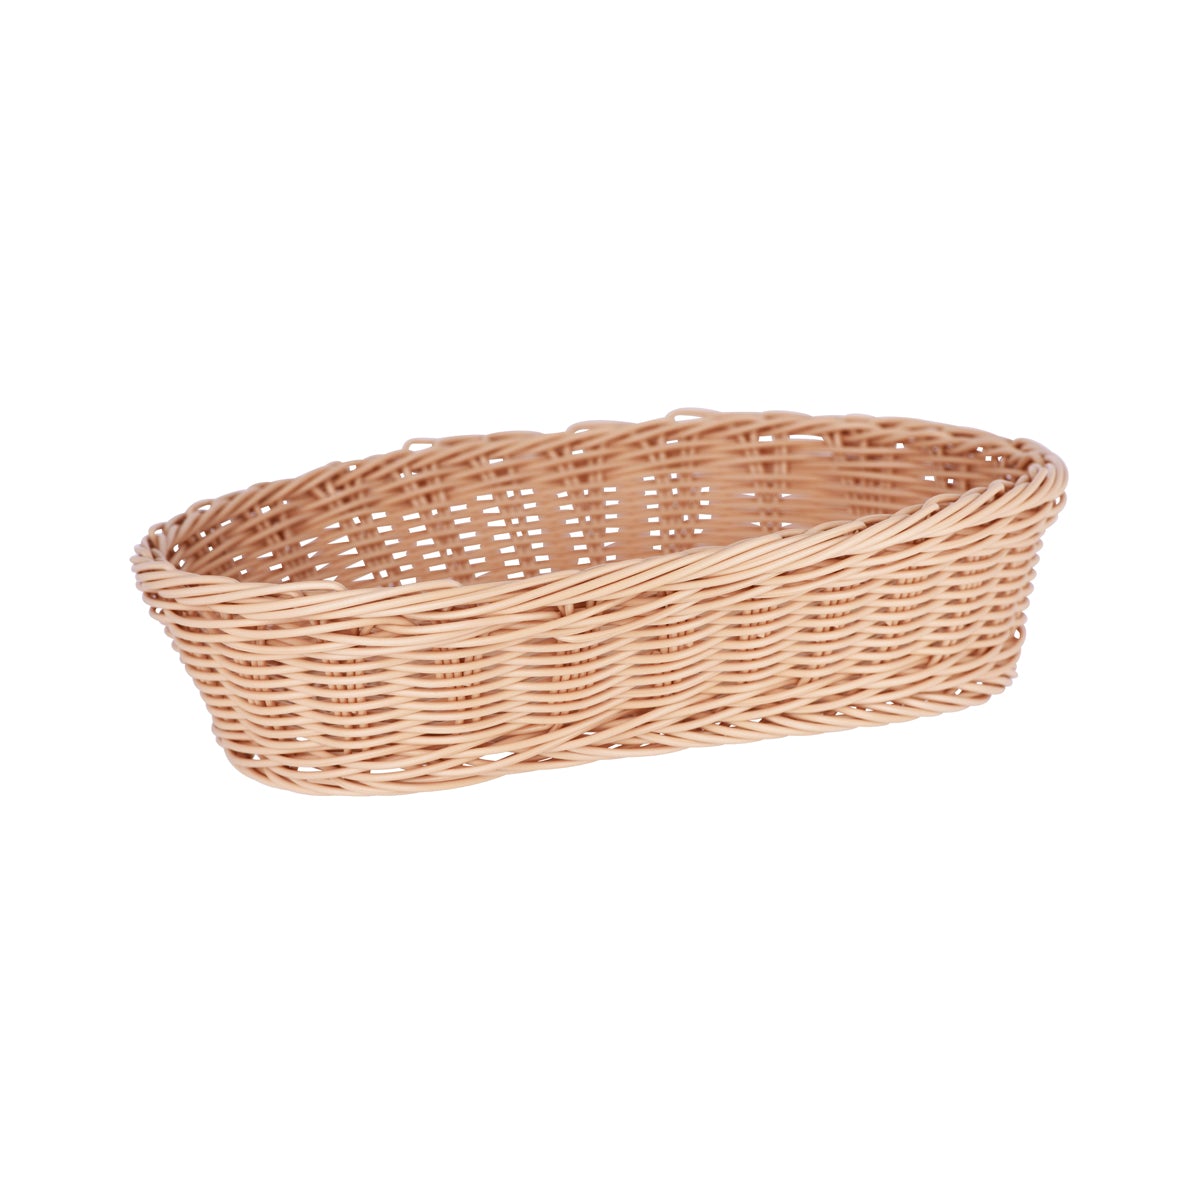 '04066 Chef Inox Bread Basket Oval Polypropylene 315x240x75mm Tomkin Australia Hospitality Supplies